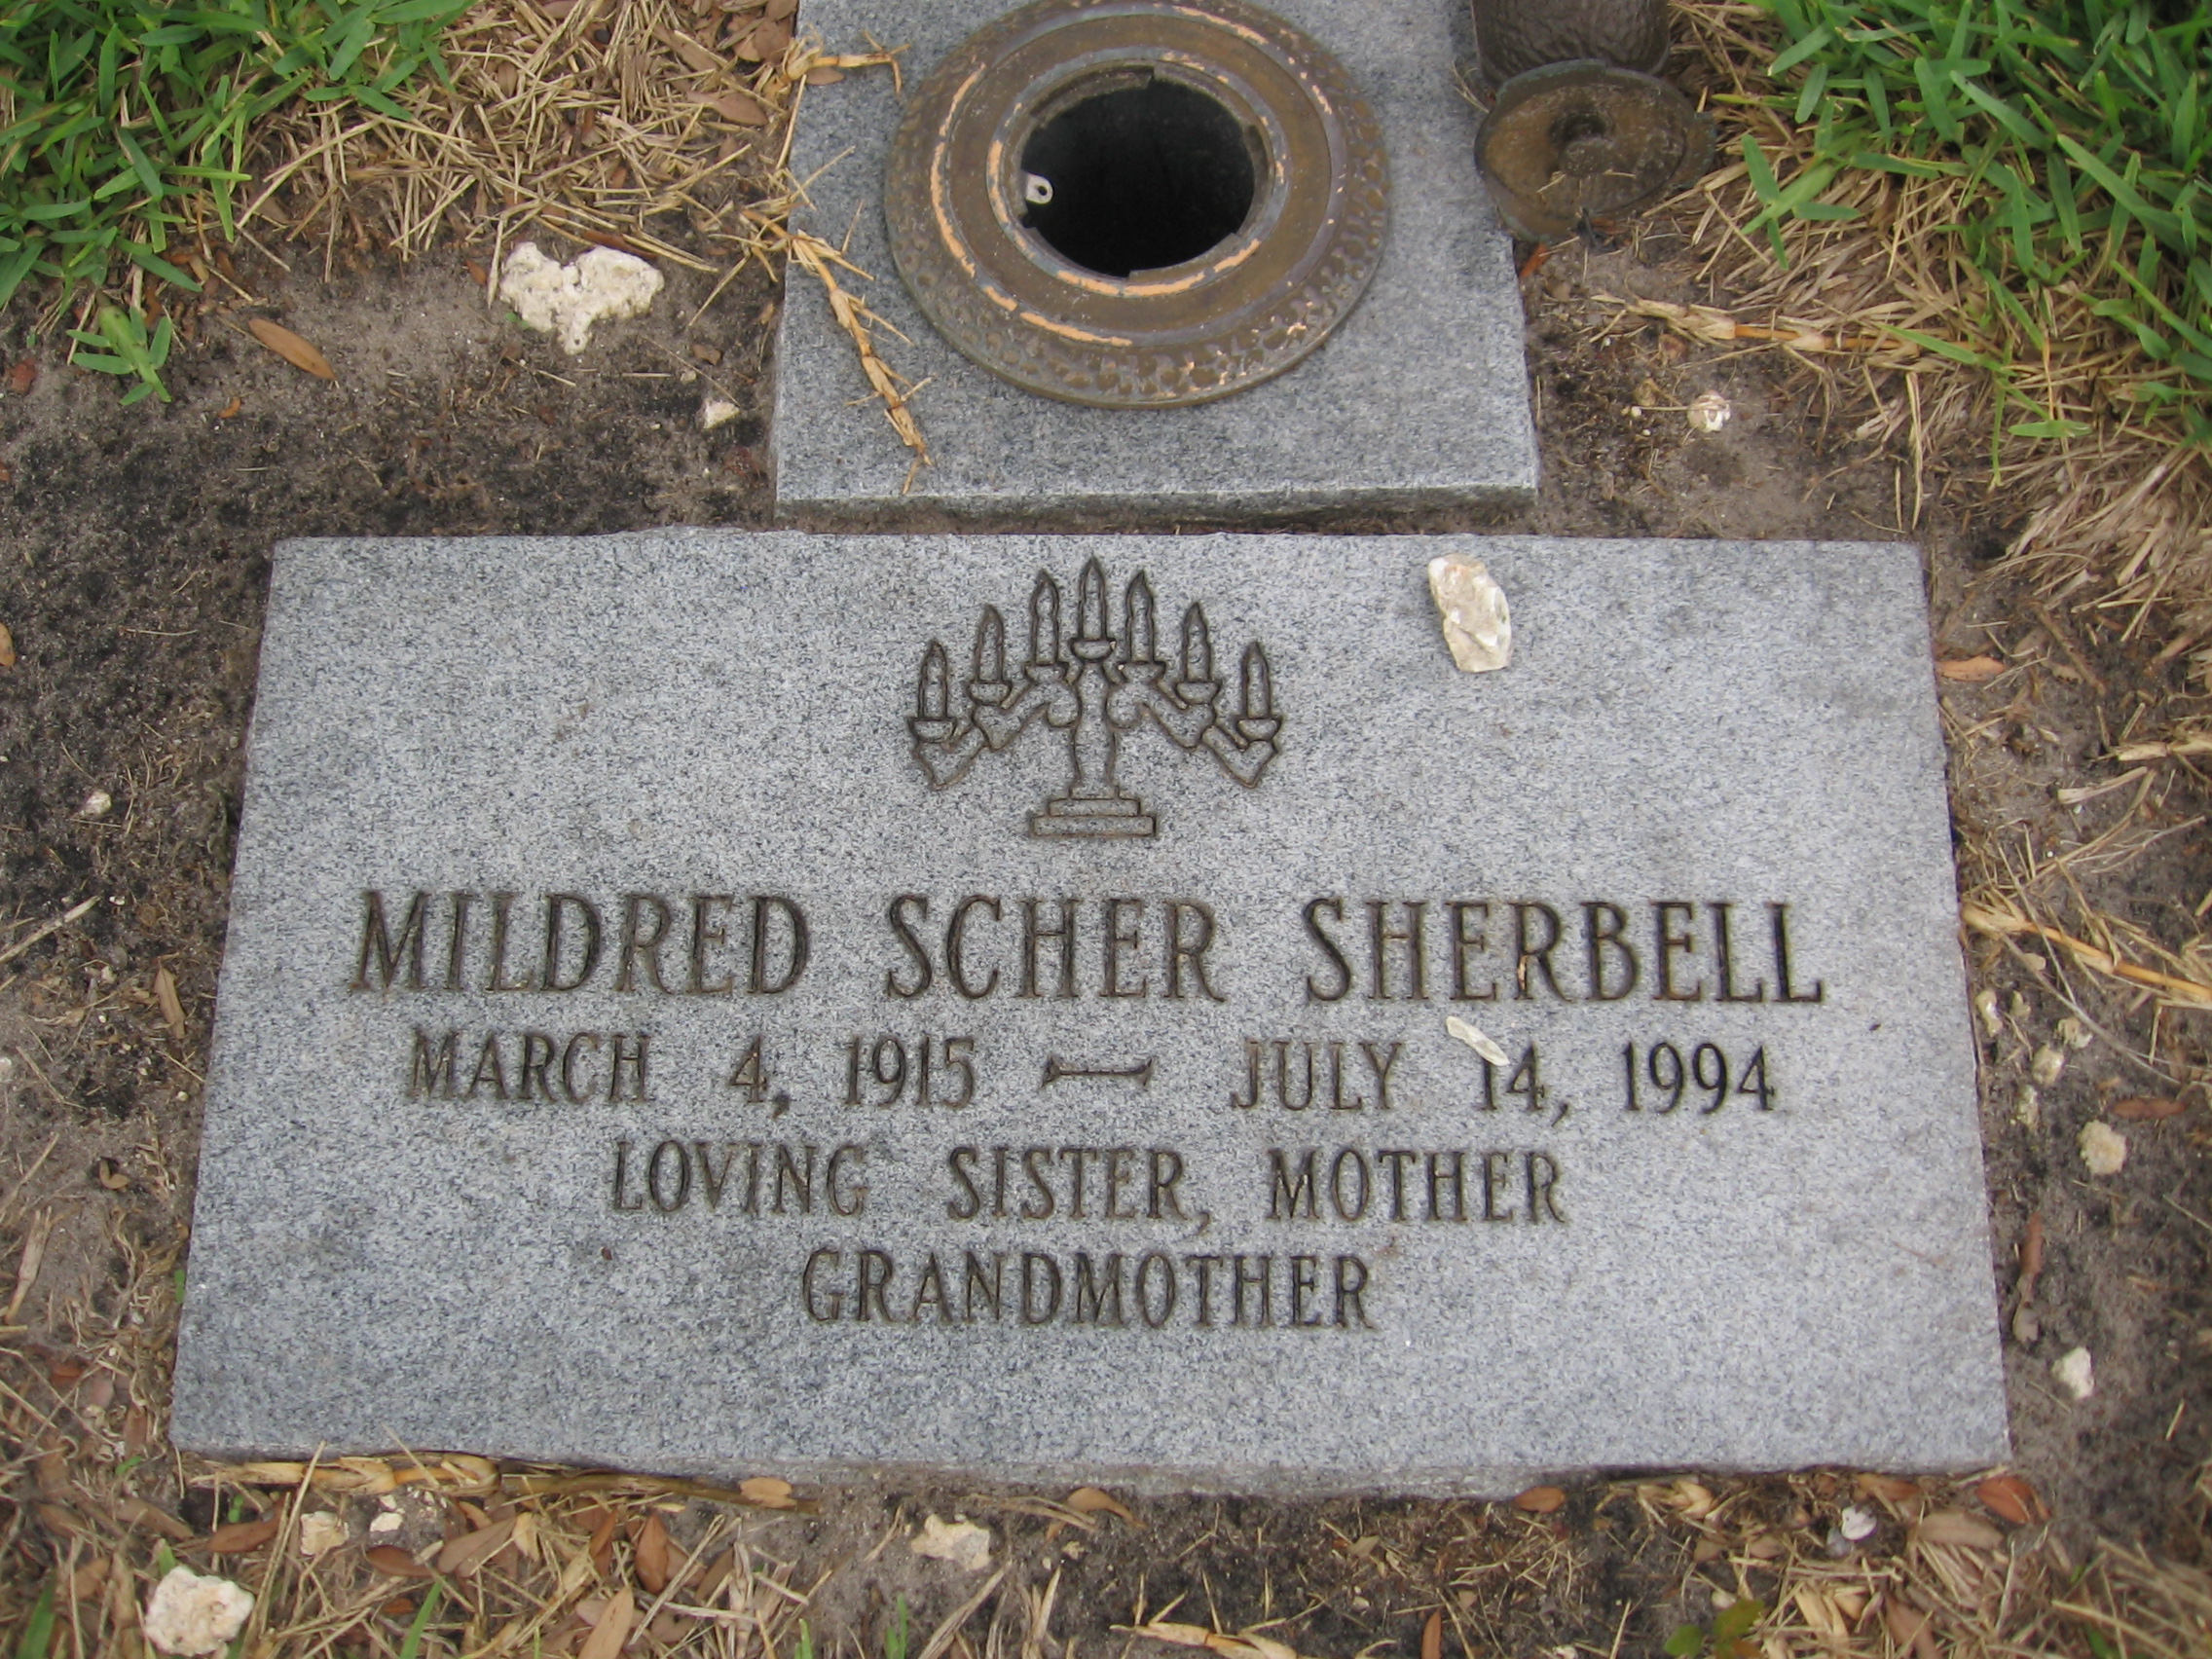 Mildred Scher Sherbell